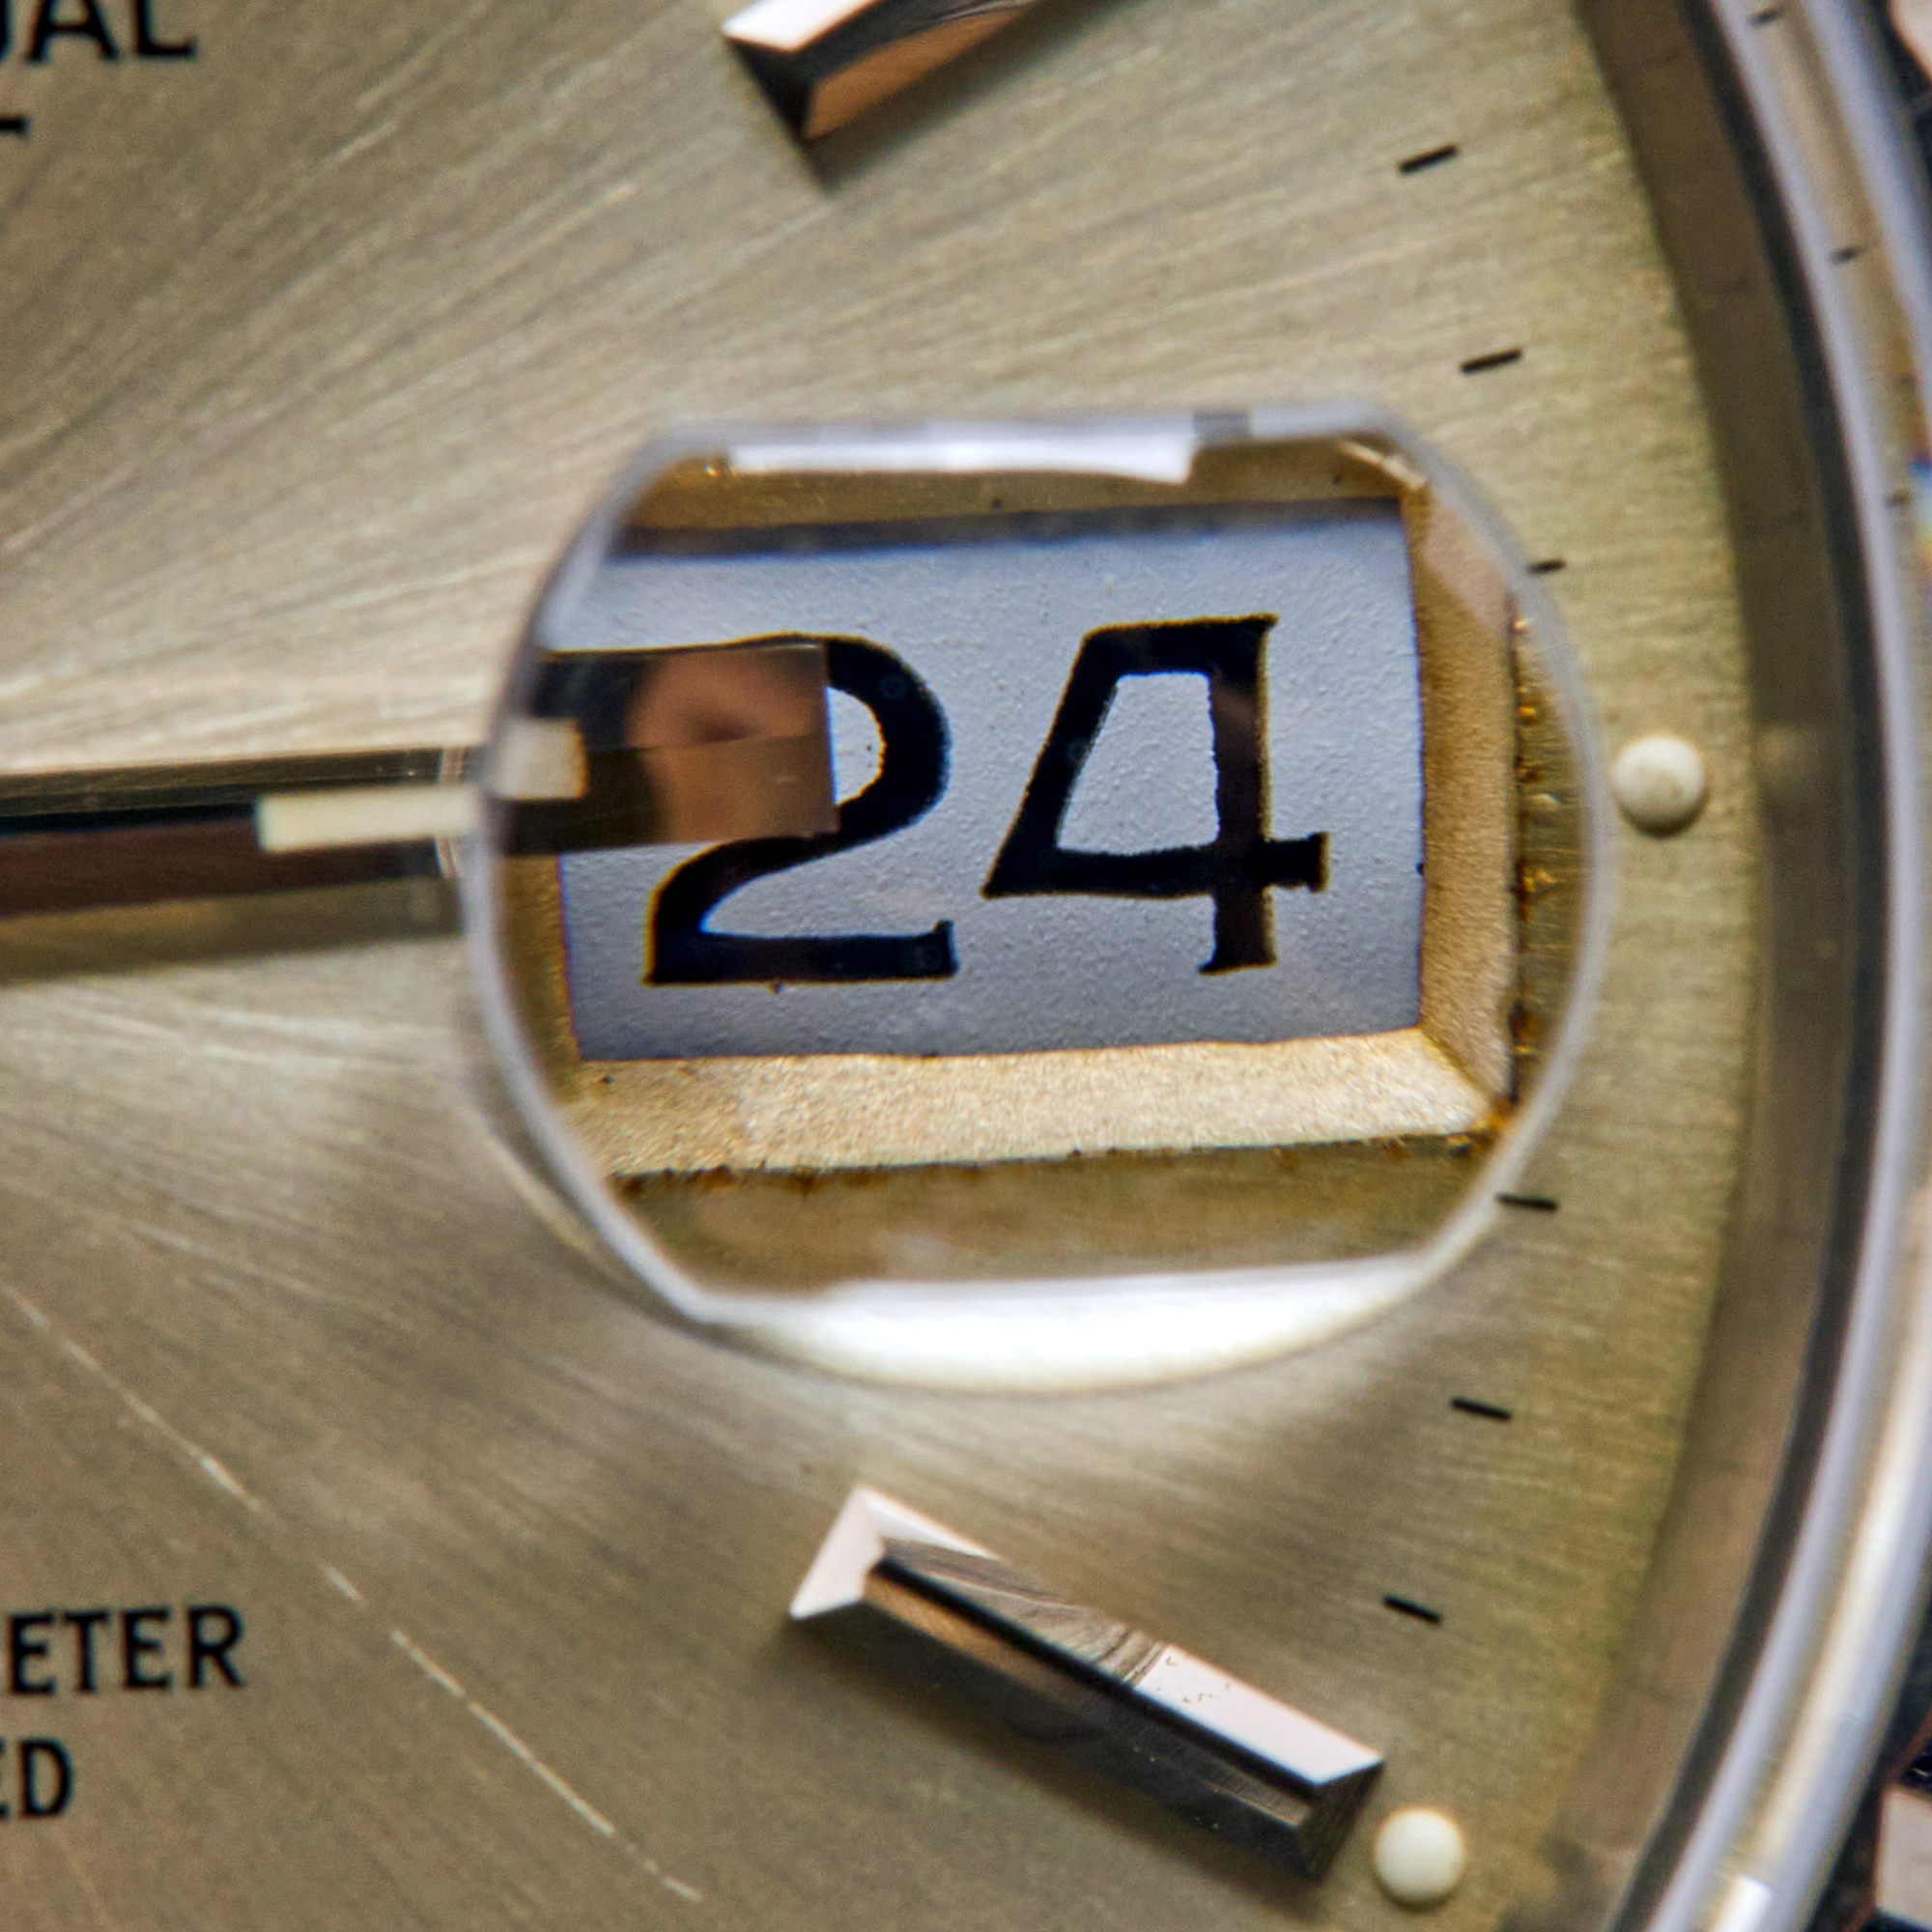 Rolex Silver 18k White Gold Stainless Steel Datejust 16234 Men's Wristwatch 36 Mm